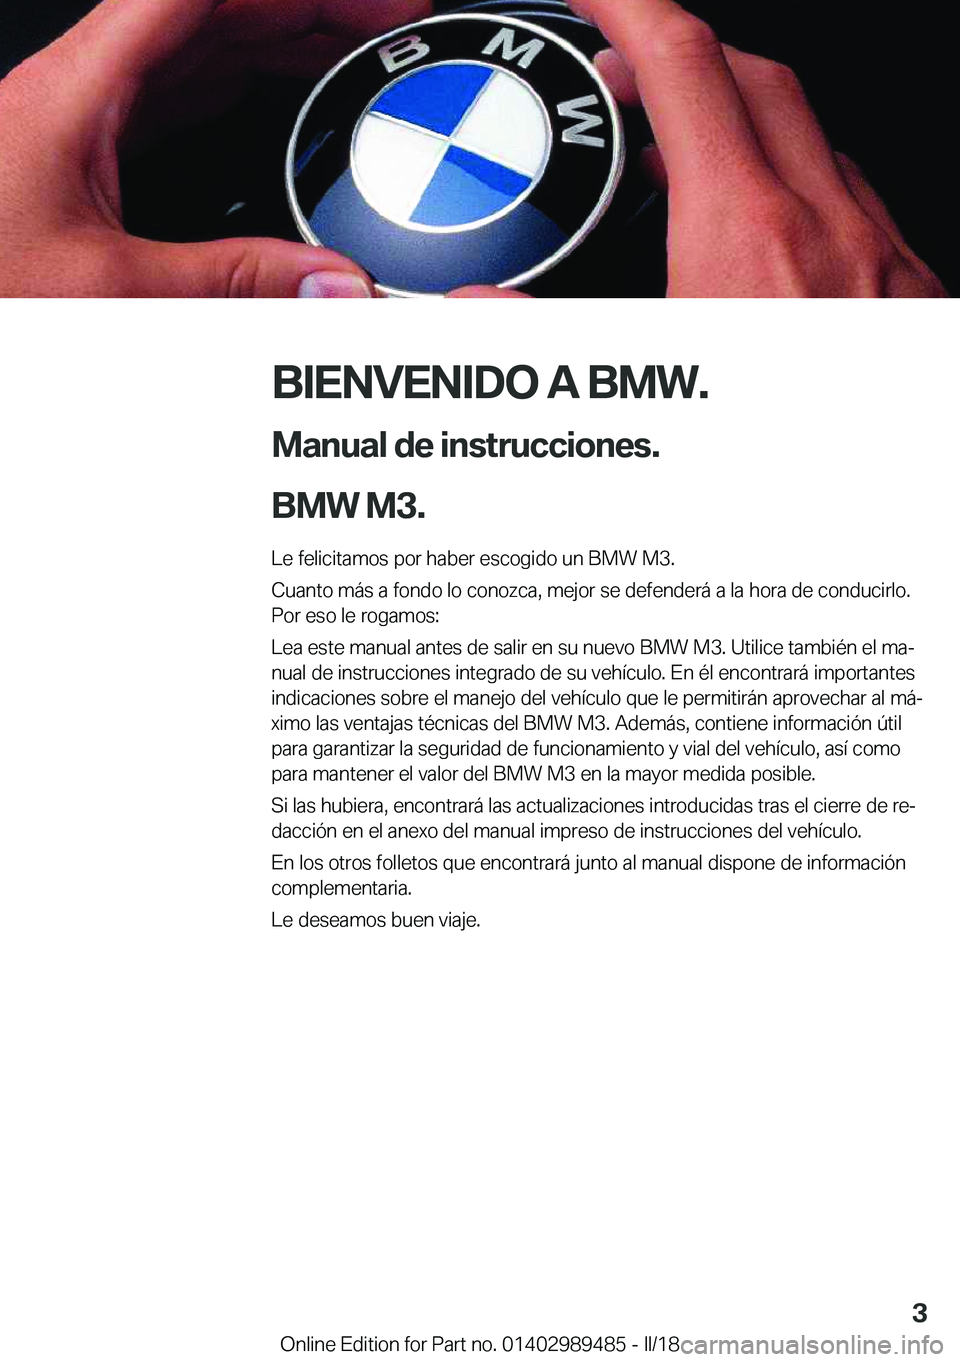 BMW M3 2018  Manuales de Empleo (in Spanish) �B�I�E�N�V�E�N�I�D�O��A��B�M�W�.
�M�a�n�u�a�l��d�e��i�n�s�t�r�u�c�c�i�o�n�e�s�.
�B�M�W��M�3�. �L�e� �f�e�l�i�c�i�t�a�m�o�s� �p�o�r� �h�a�b�e�r� �e�s�c�o�g�i�d�o� �u�n� �B�M�W� �M�3�.
�C�u�a�n�t�o